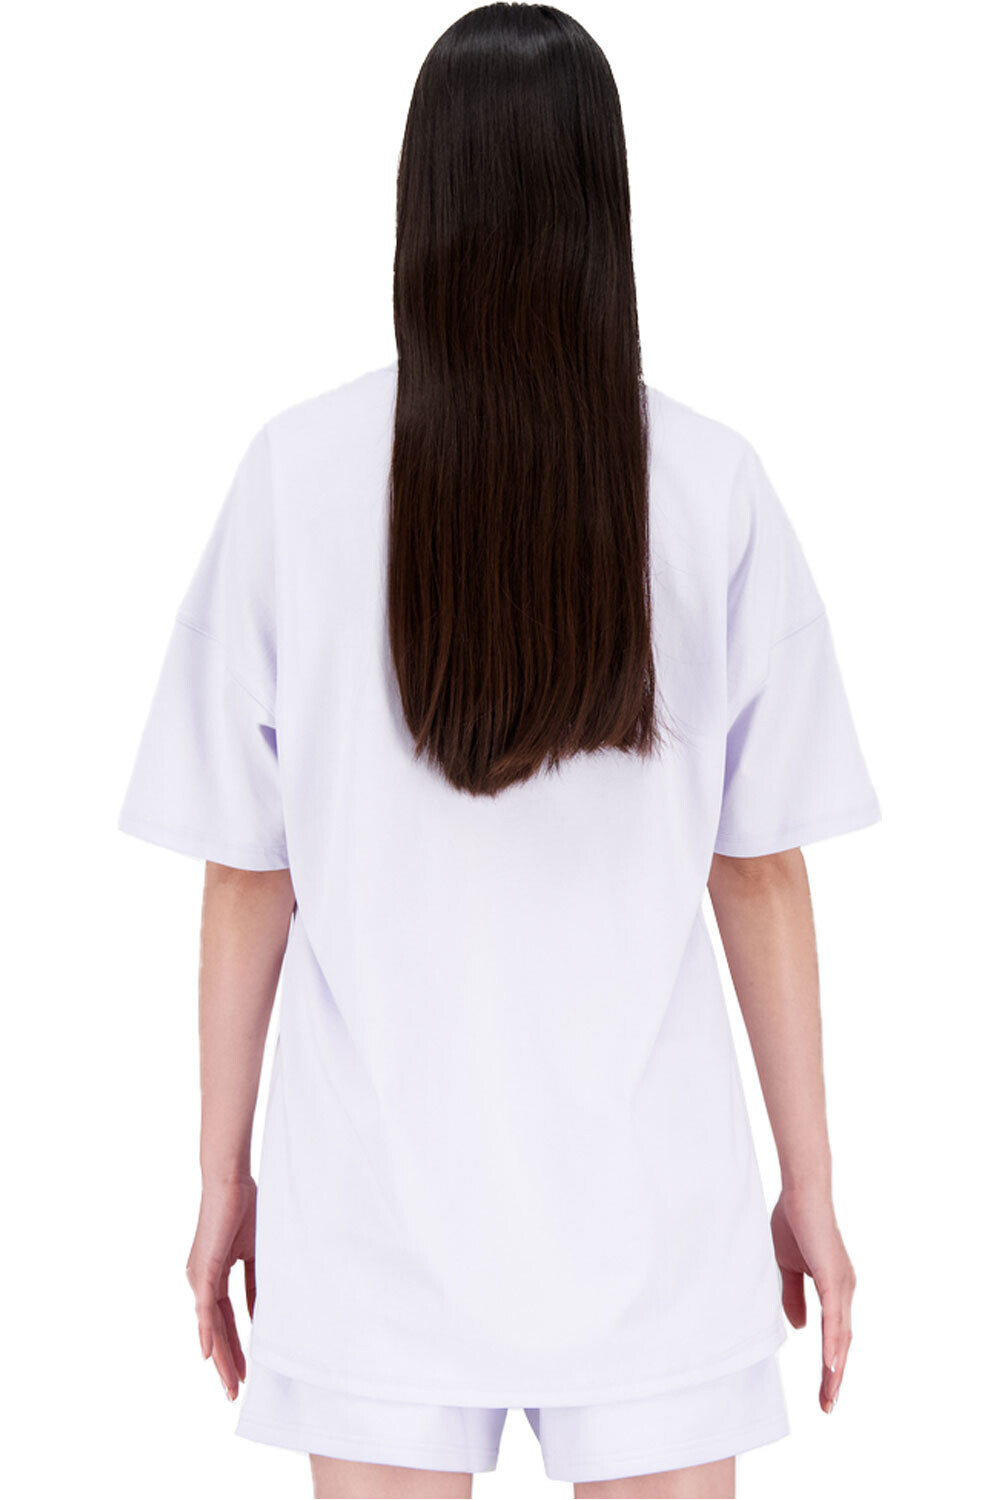 New Balance camiseta manga corta mujer NB Athletics Nature State Short Sleeve Tee vista trasera